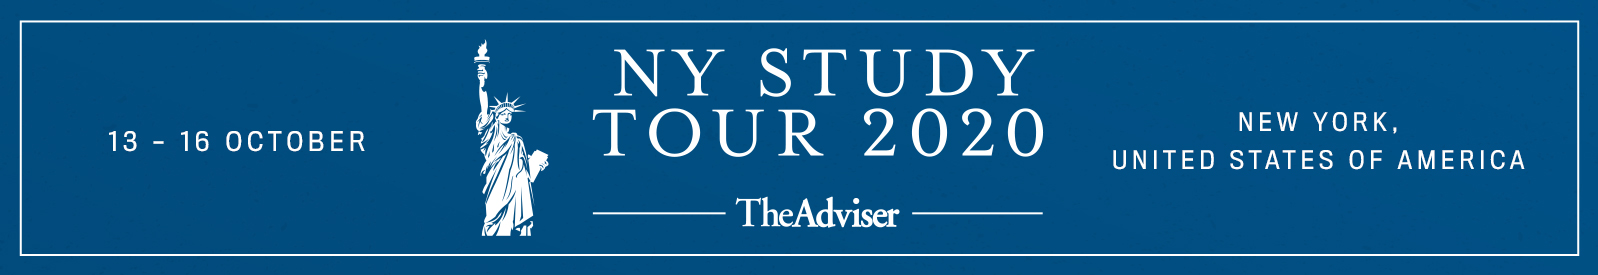 The Adviser NY Study Tour 2020